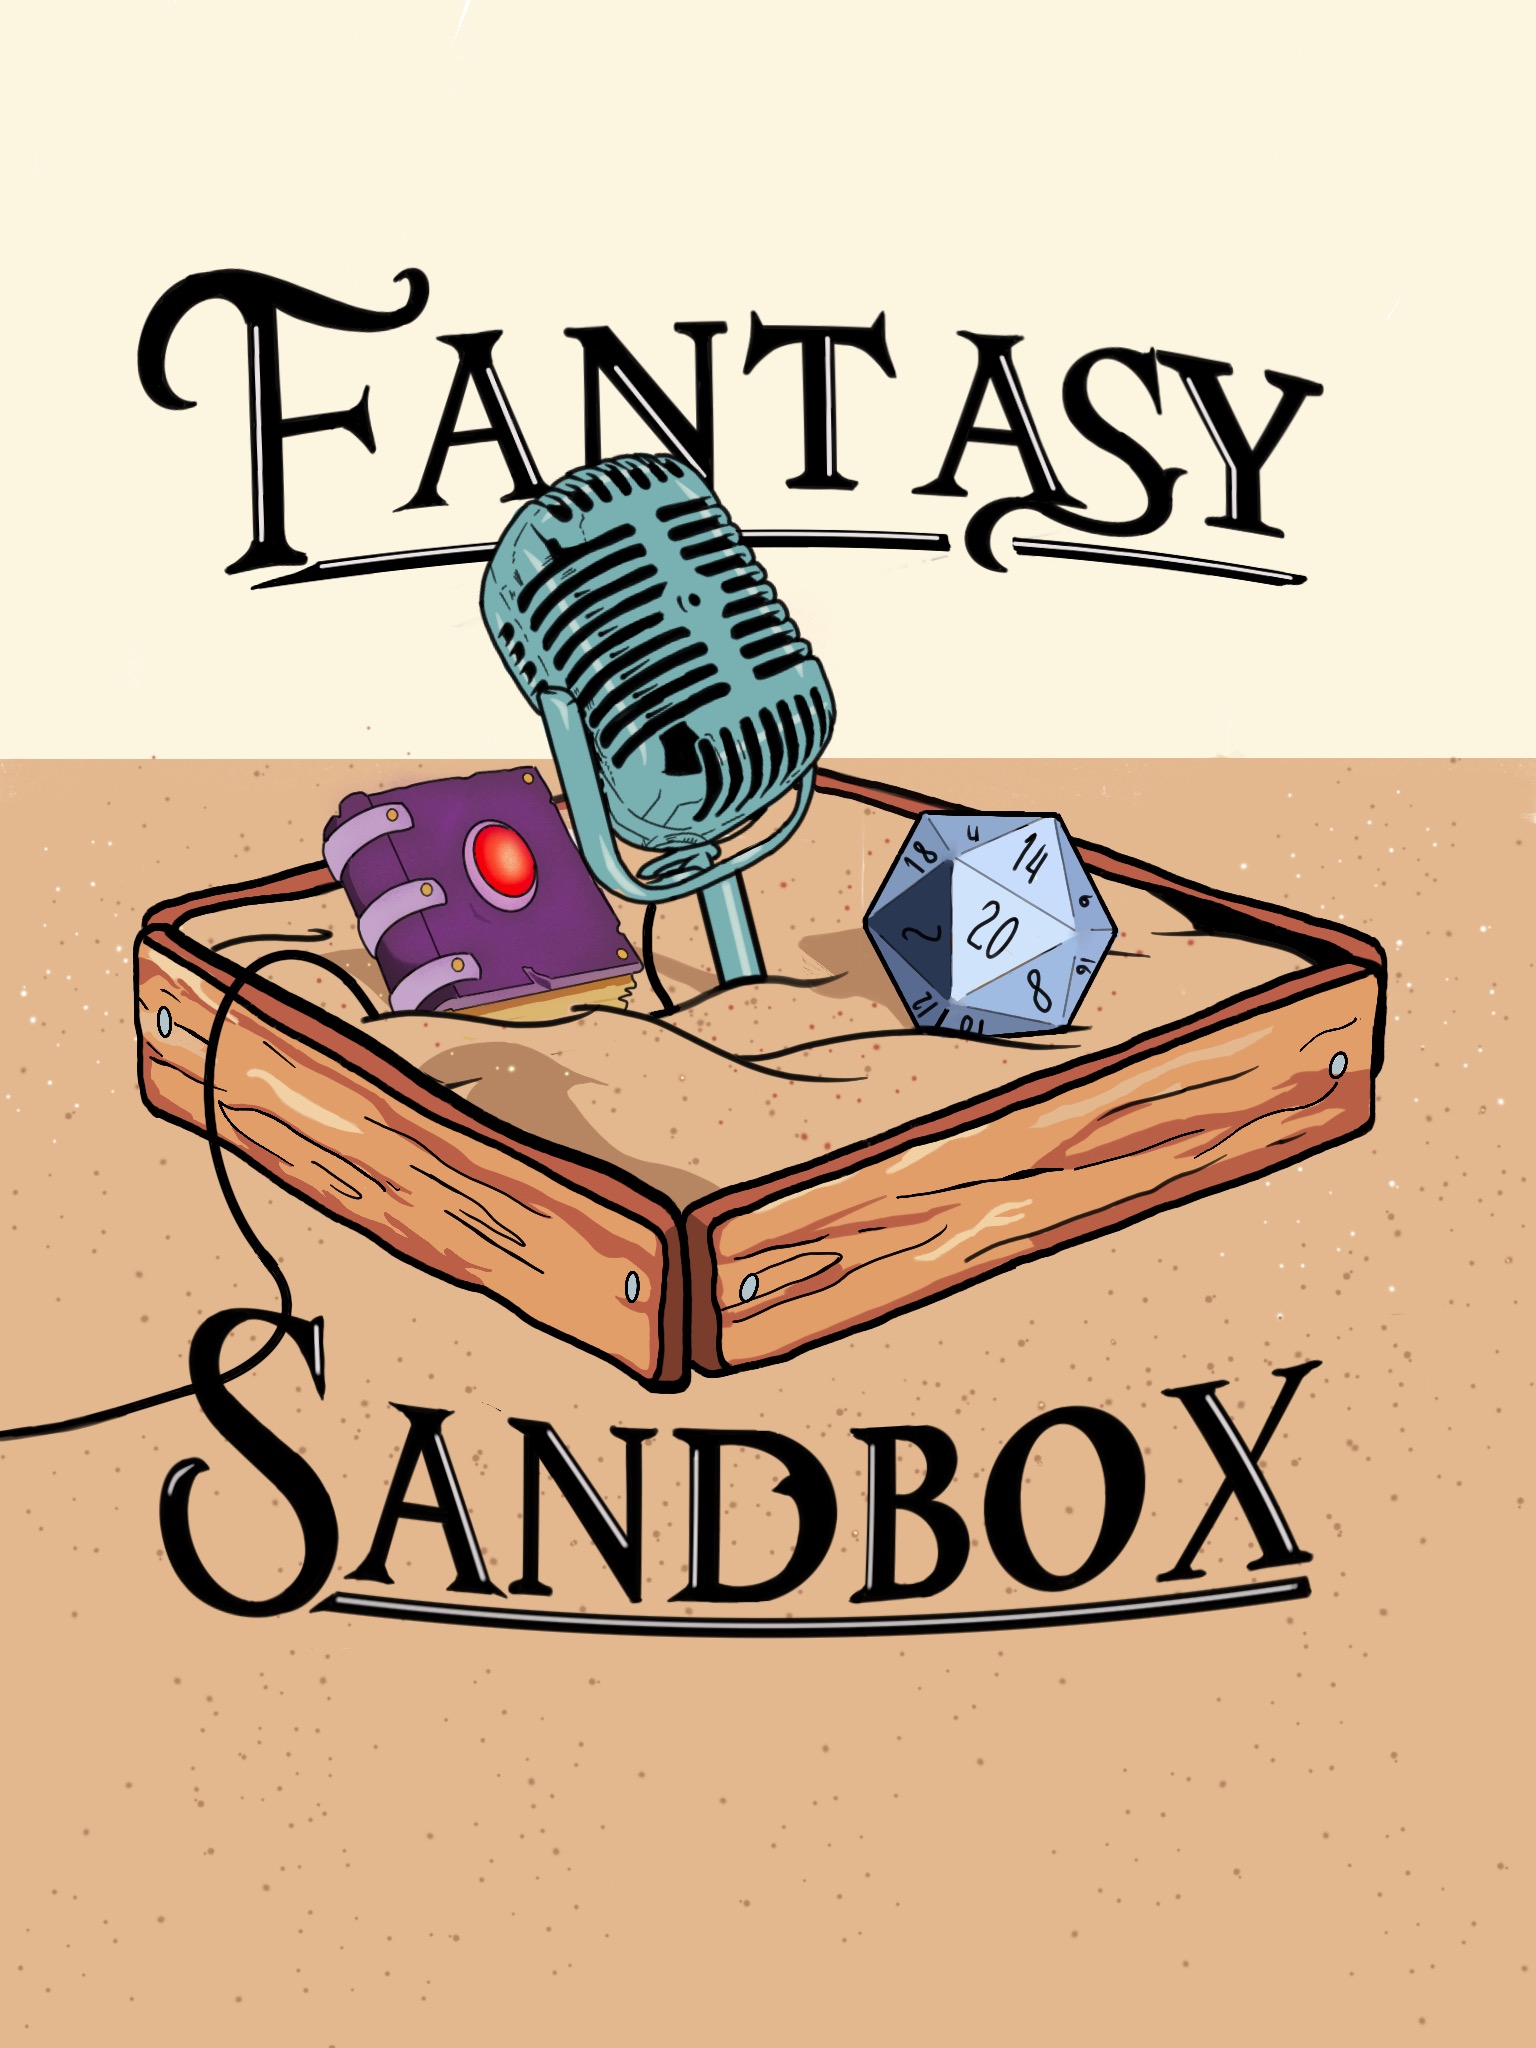 Fantasy Sandbox